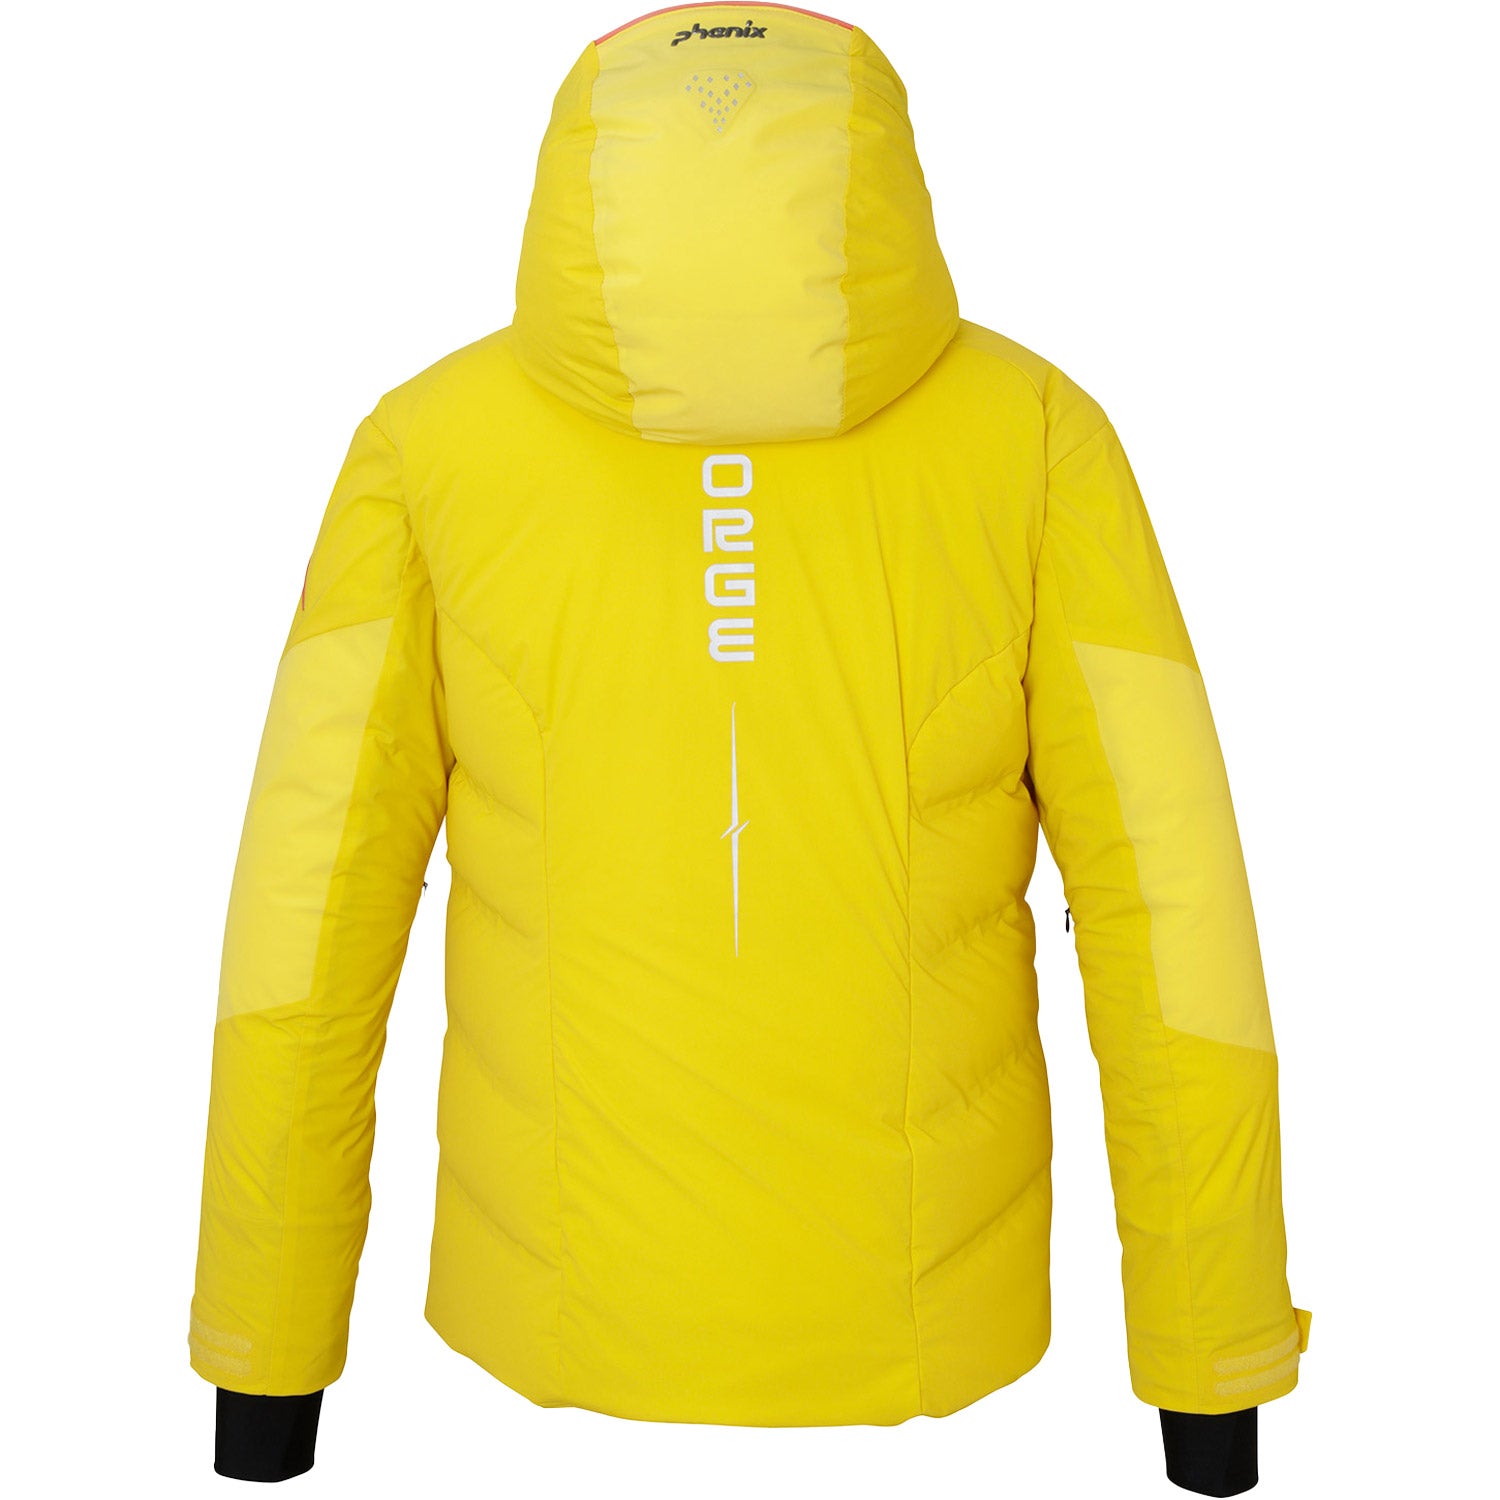 Phenix Norway Alpine Team Hybrid Down Ski Jacket 2021 Golden Yellow